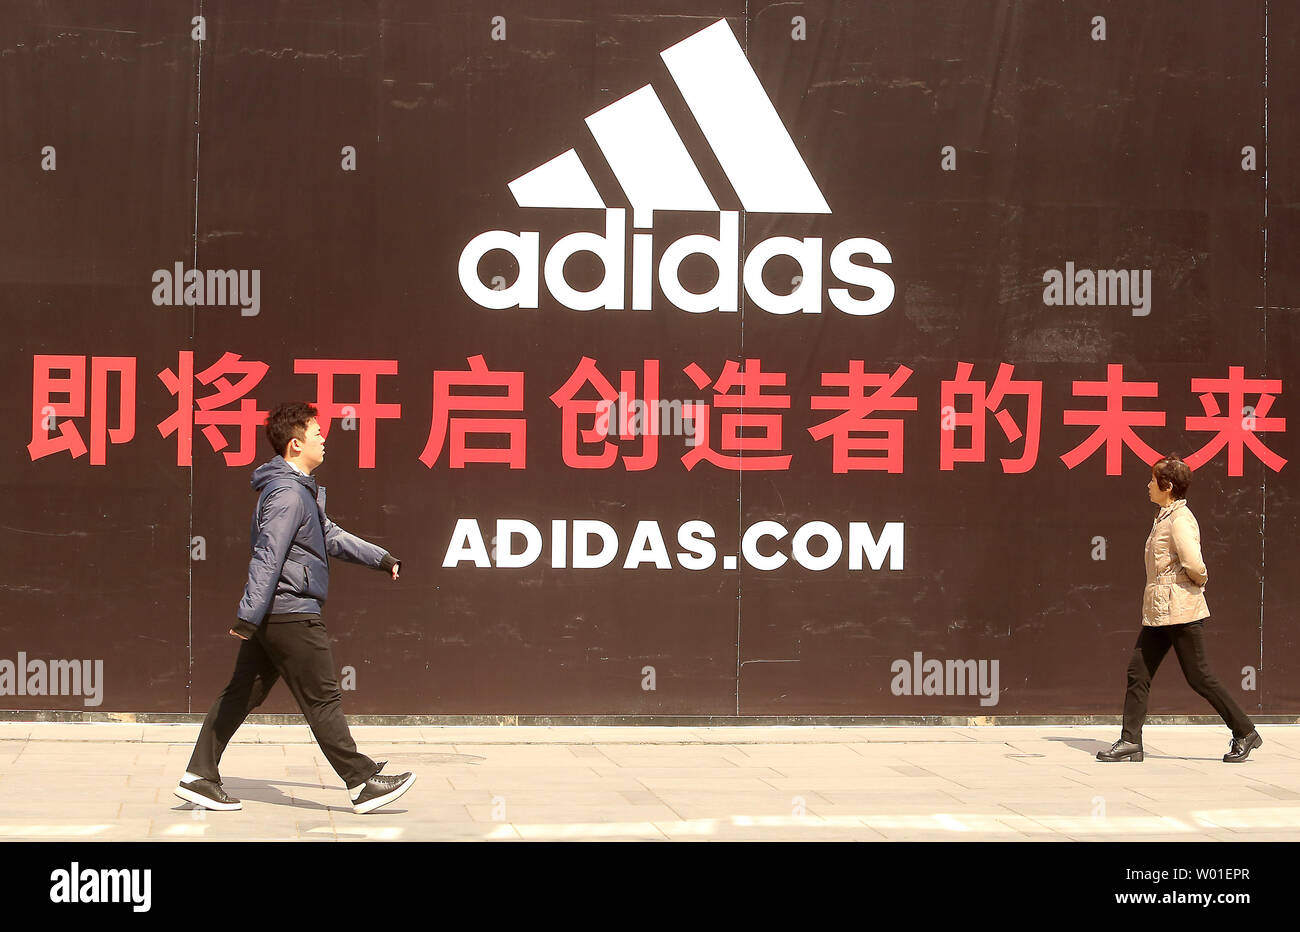 Ropa Adidas Barata China Lima | ccelrecreo.com